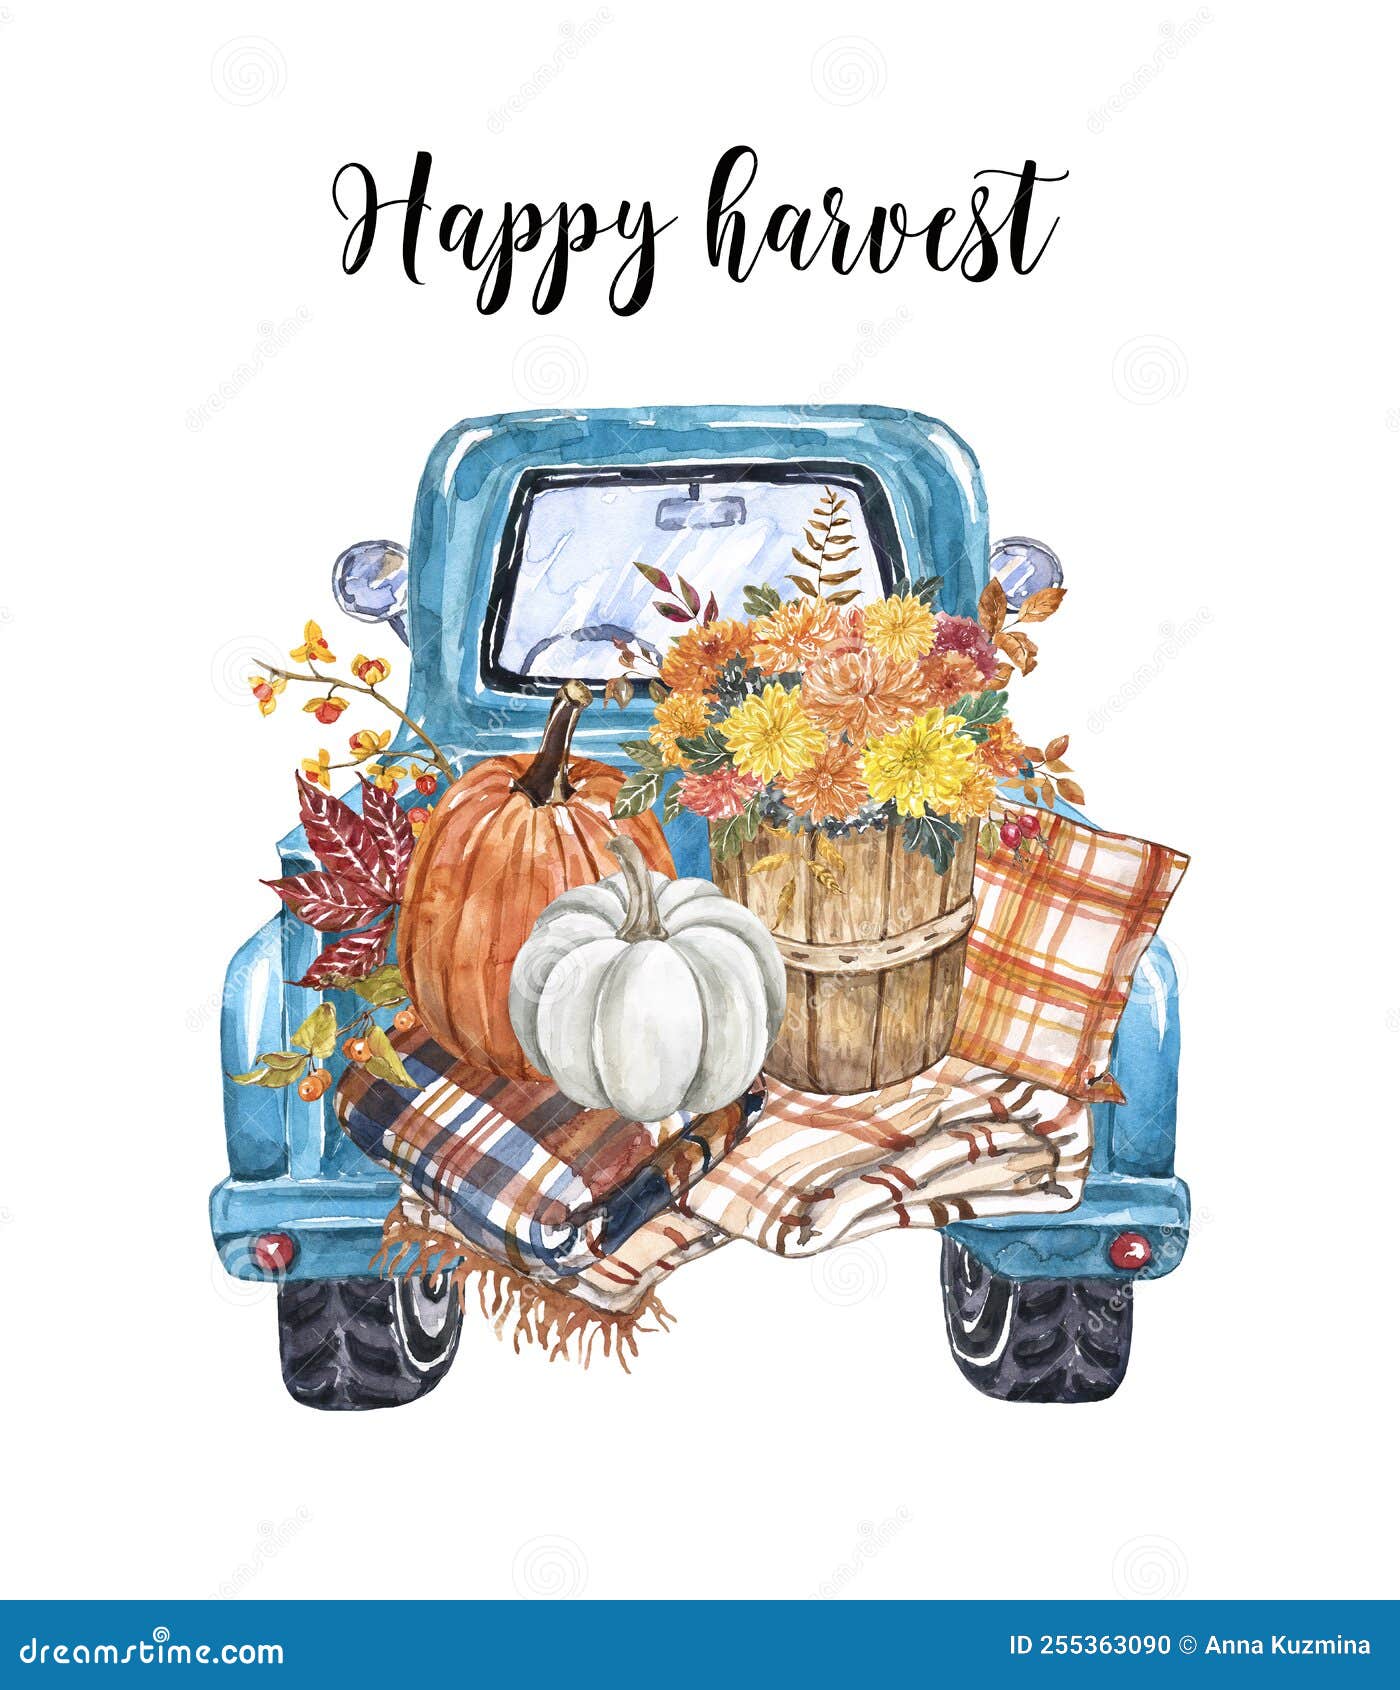 https://thumbs.dreamstime.com/z/fall-harvest-truck-pumpkins-mum-flowers-basket-pillows-blankets-watercolor-hand-painted-illustration-watercolor-blue-255363090.jpg